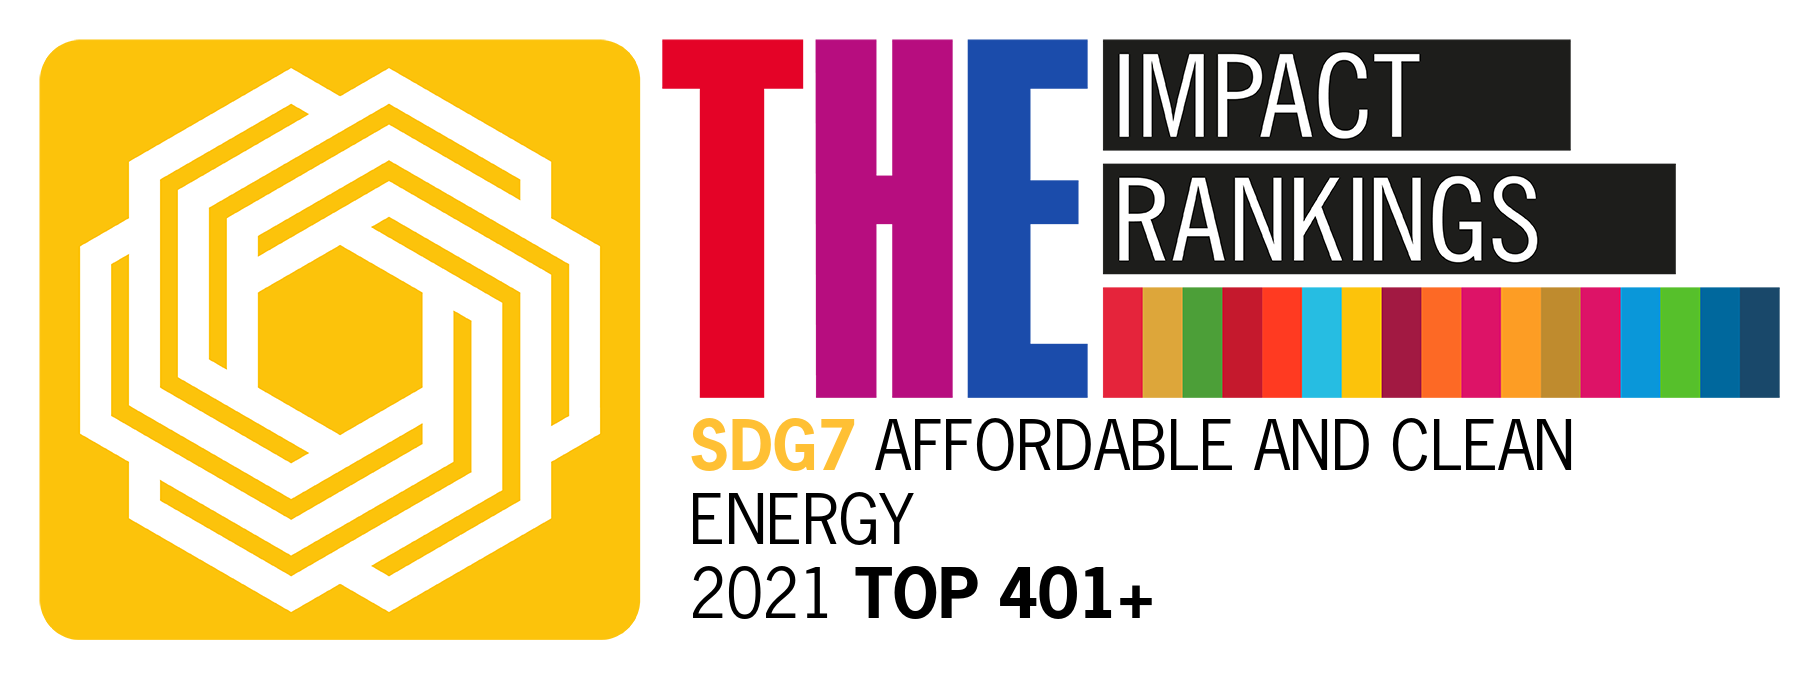 Impact_Ranking-2021_SDG7